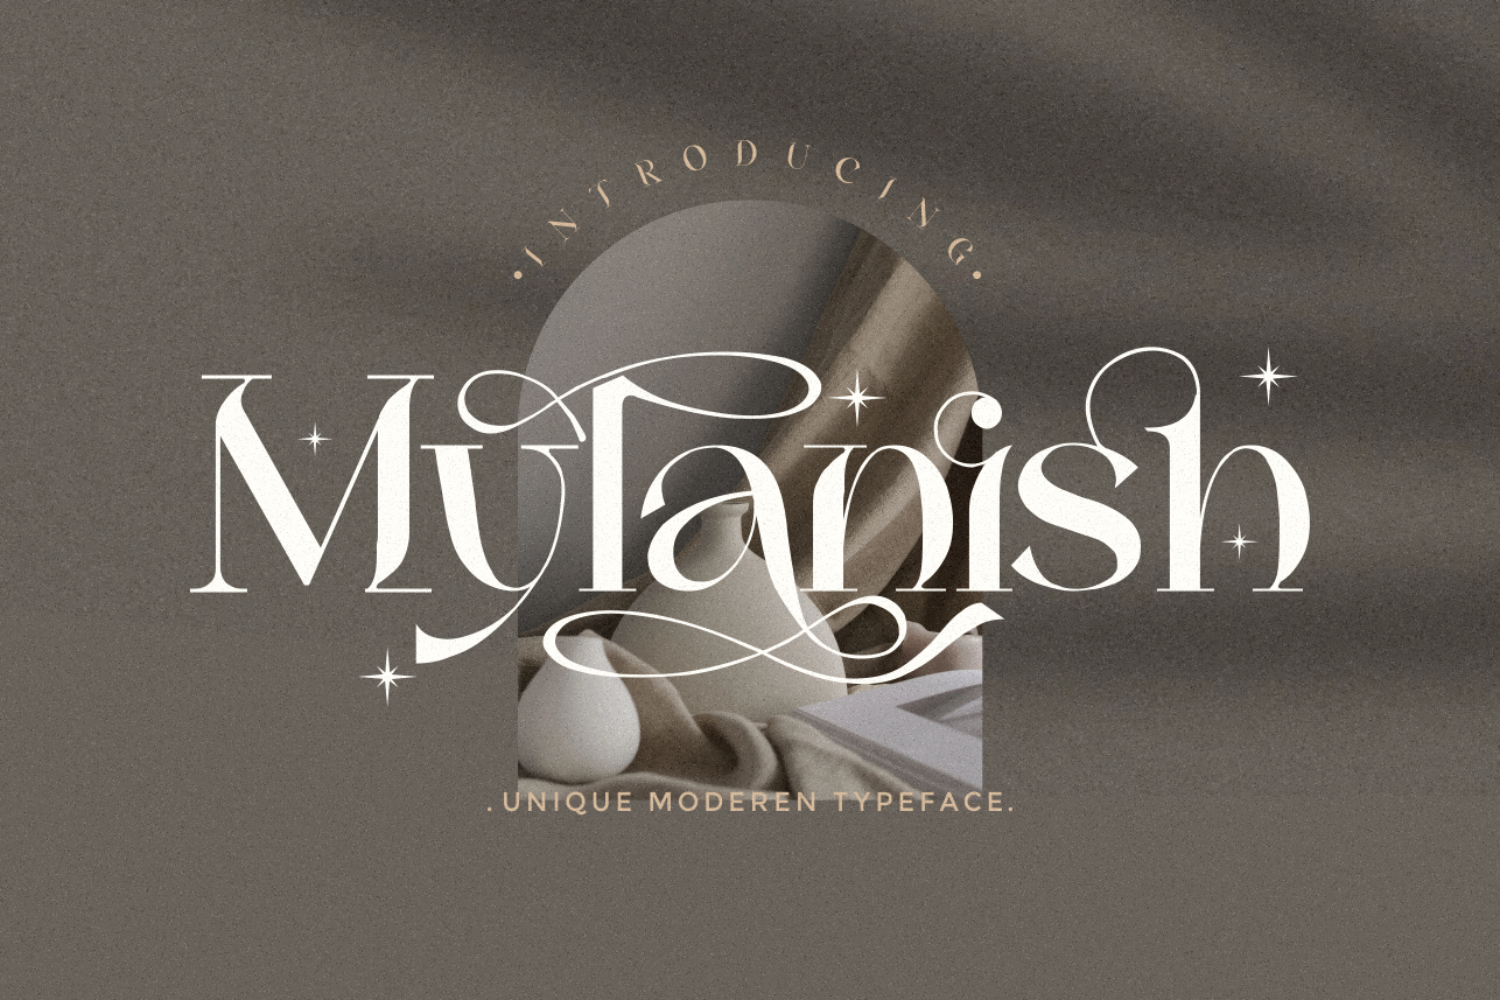 Mylanish _ Unique Modern Typeface